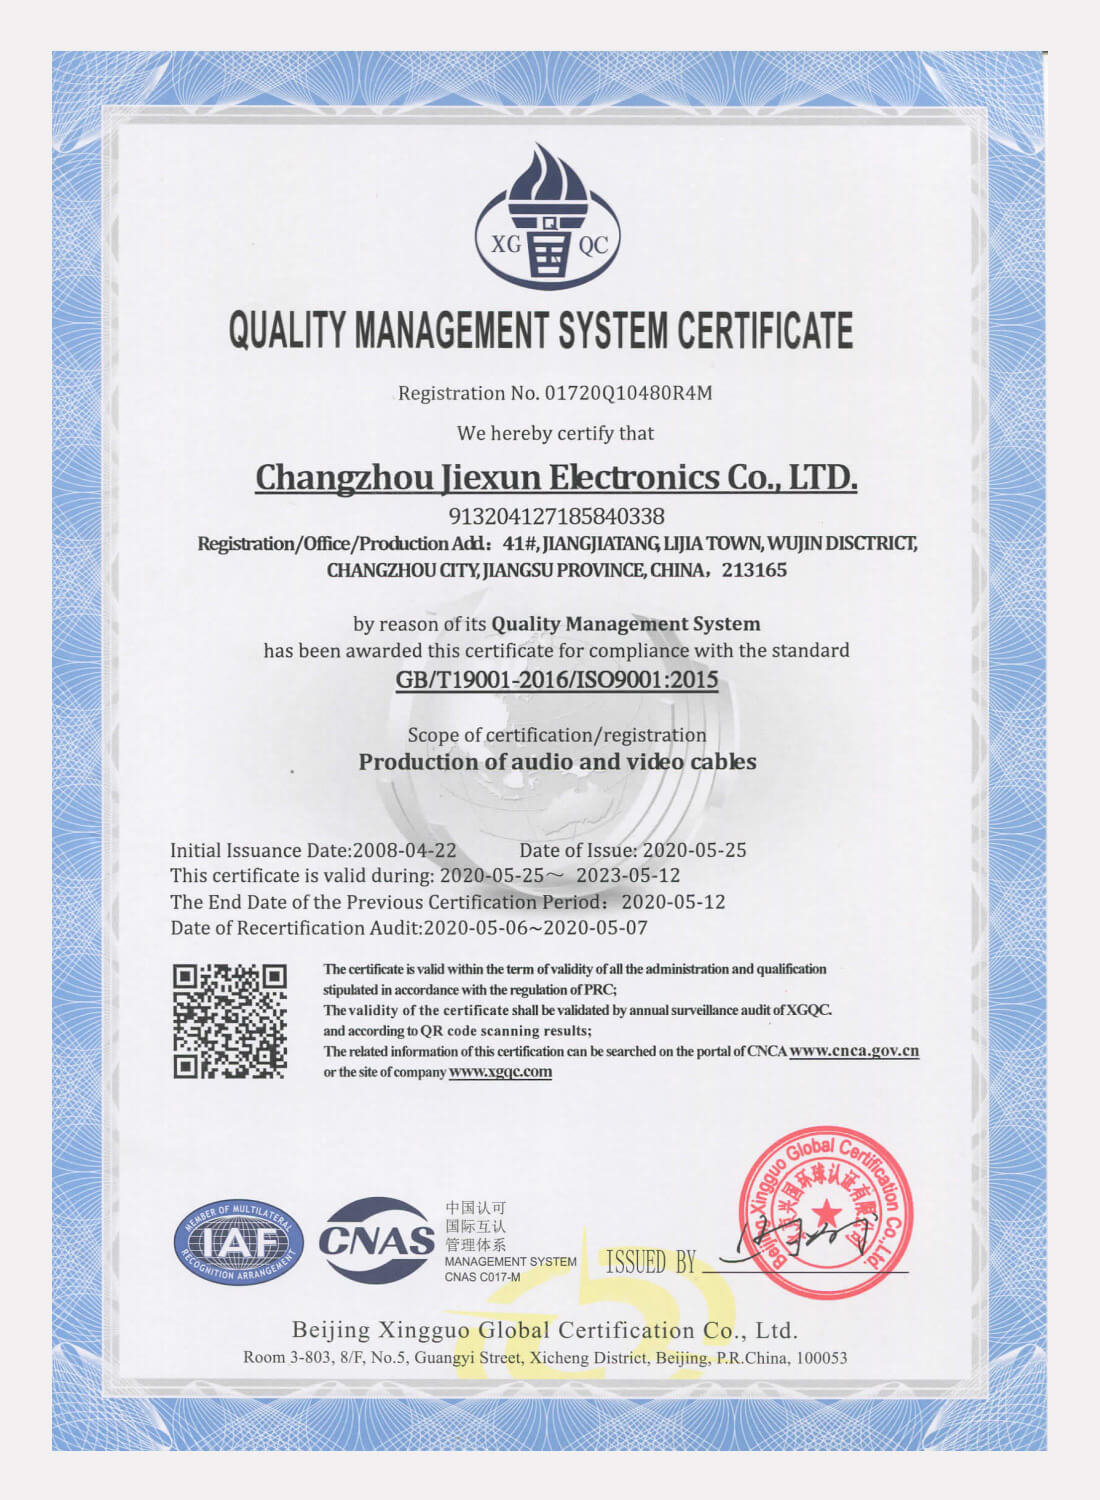 ISO9001 cerification